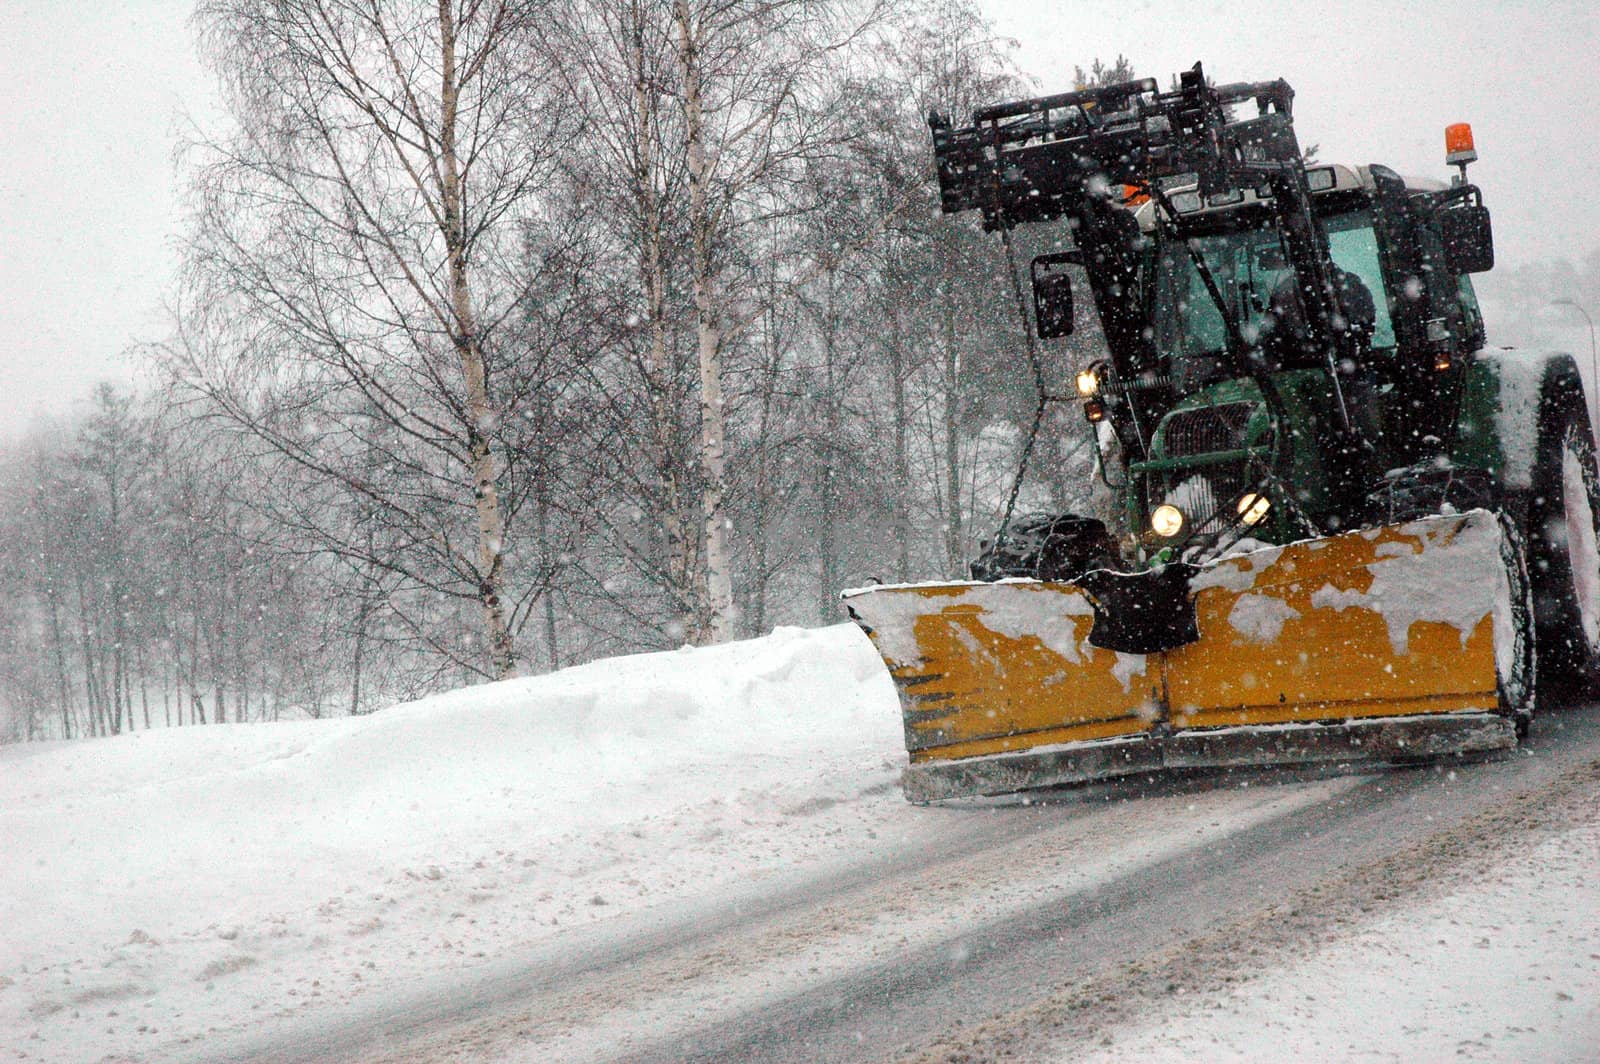 Winter in Larvik, Vestfold, Norway.
( 2005/2006 )